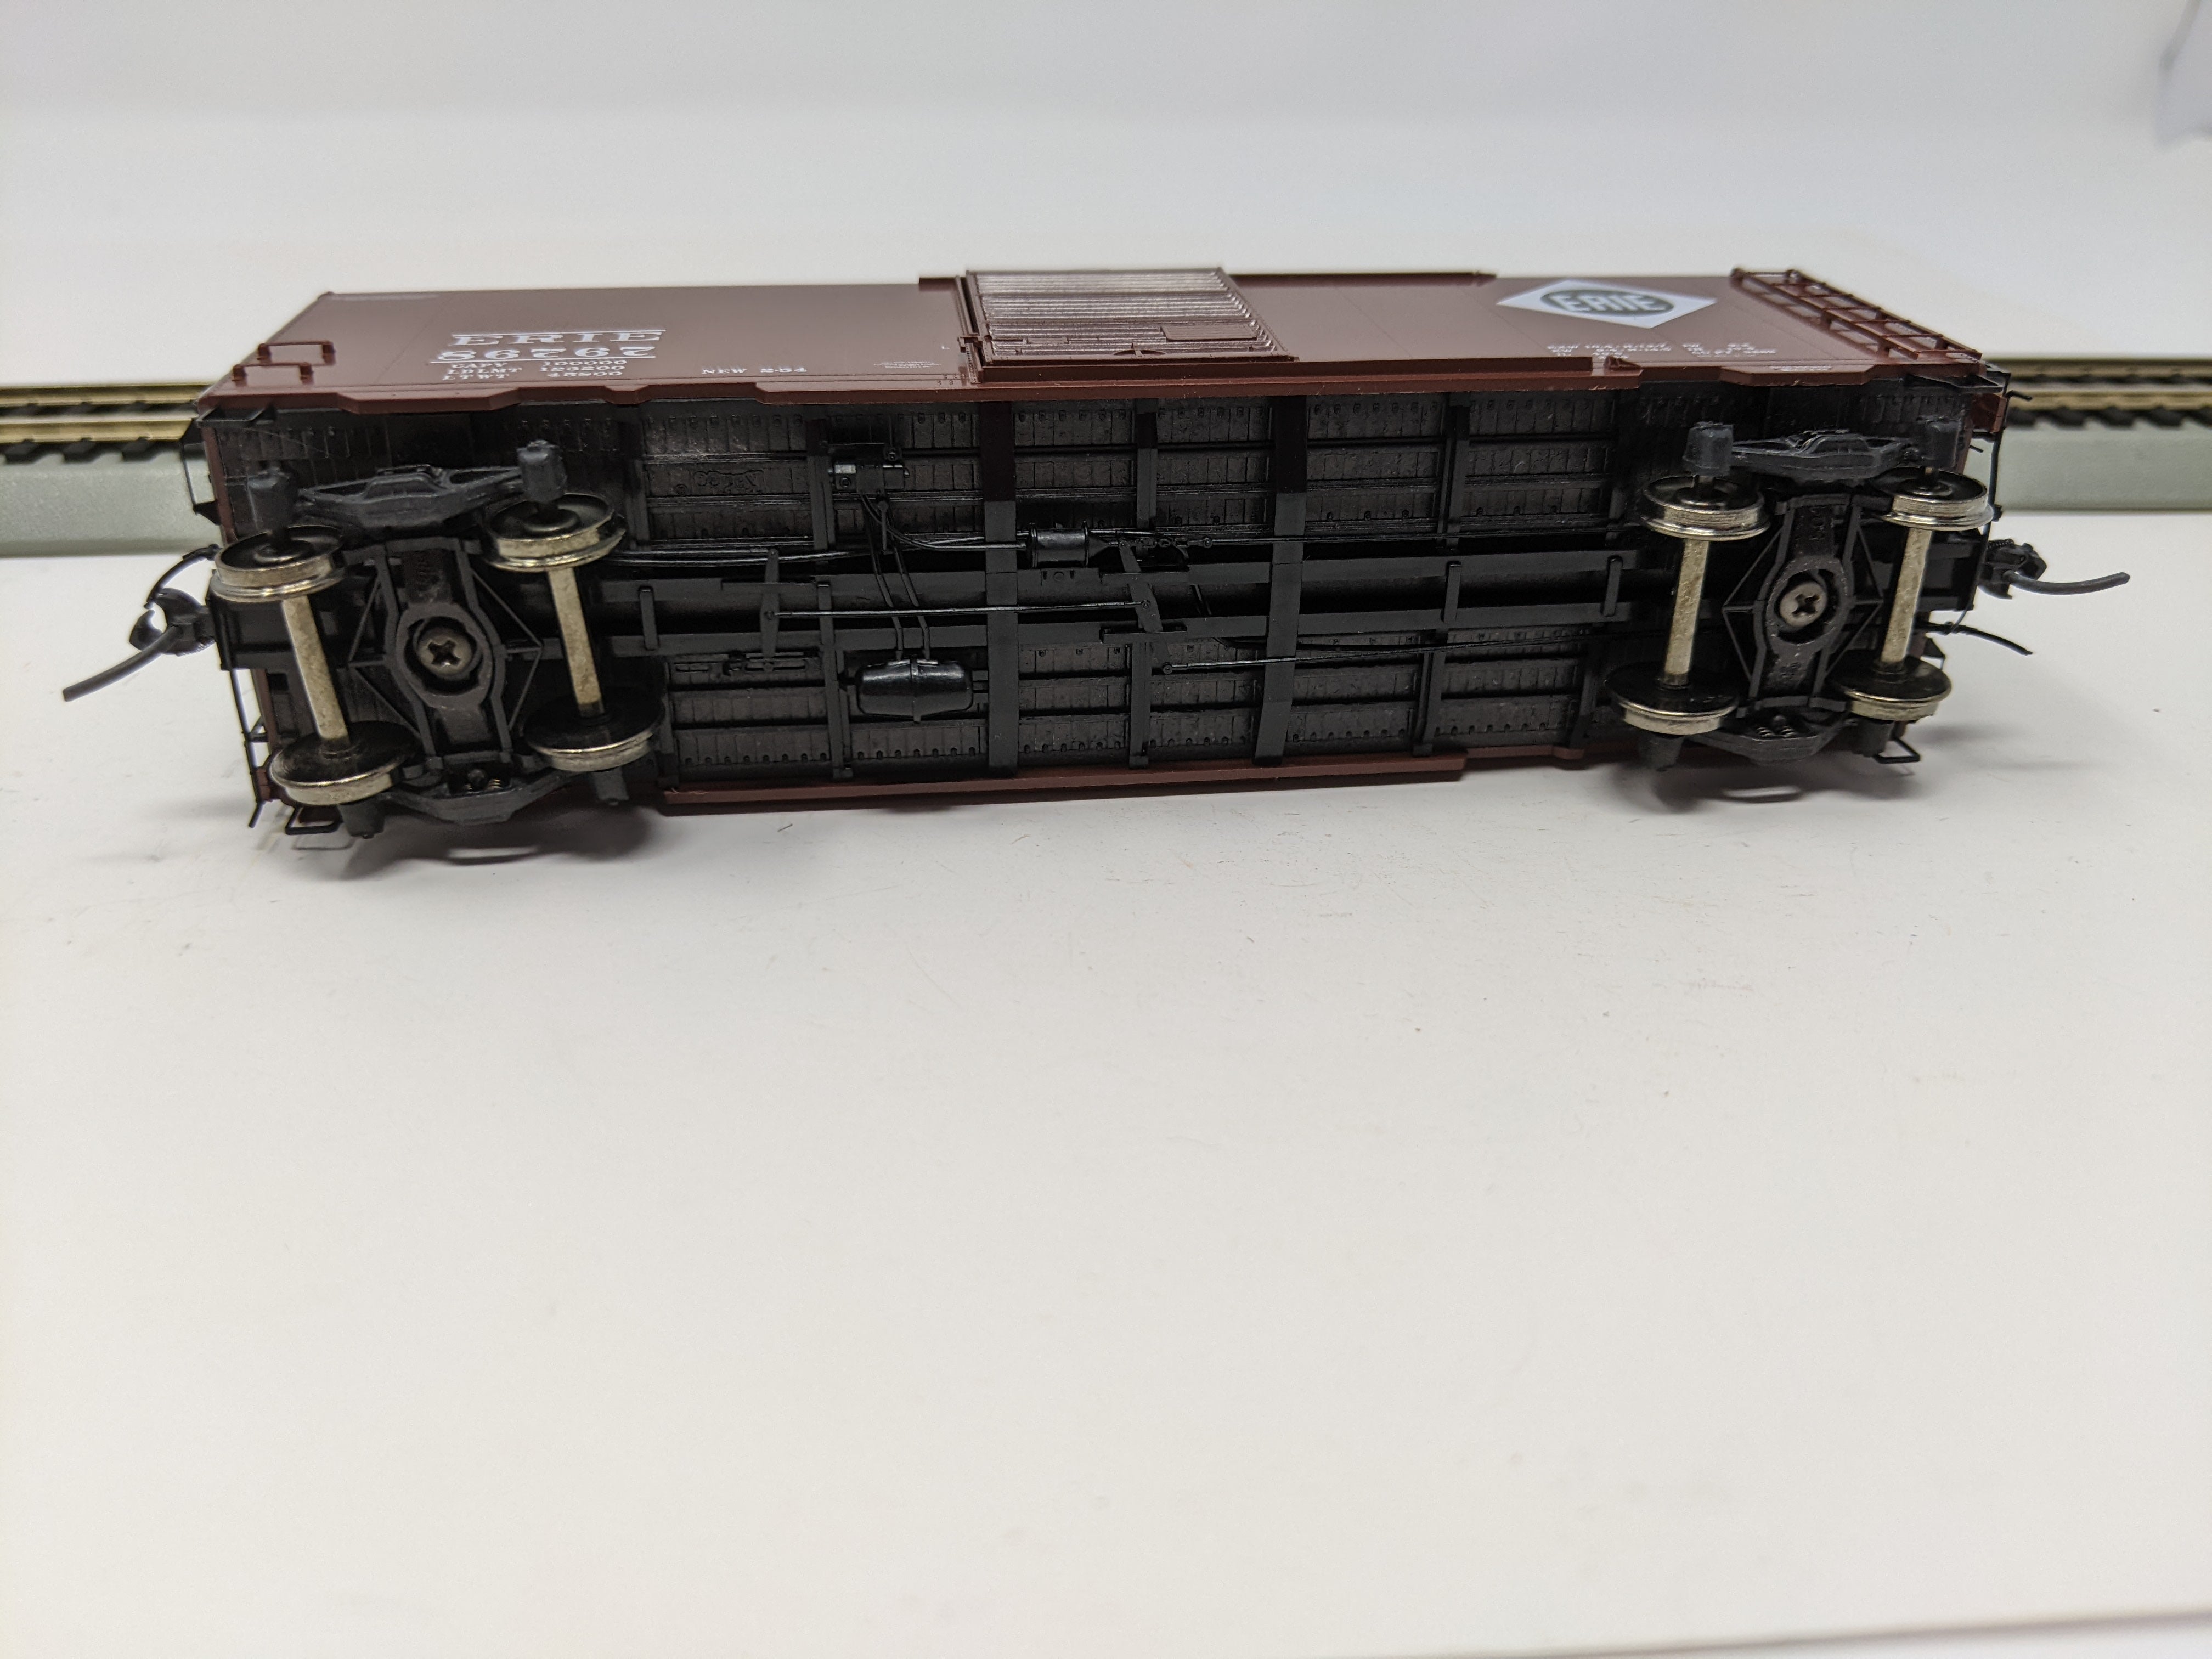 USED KADEE 4904 HO Scale, 40' PS-1 Standard Boxcar, Erie #86767, Read Description